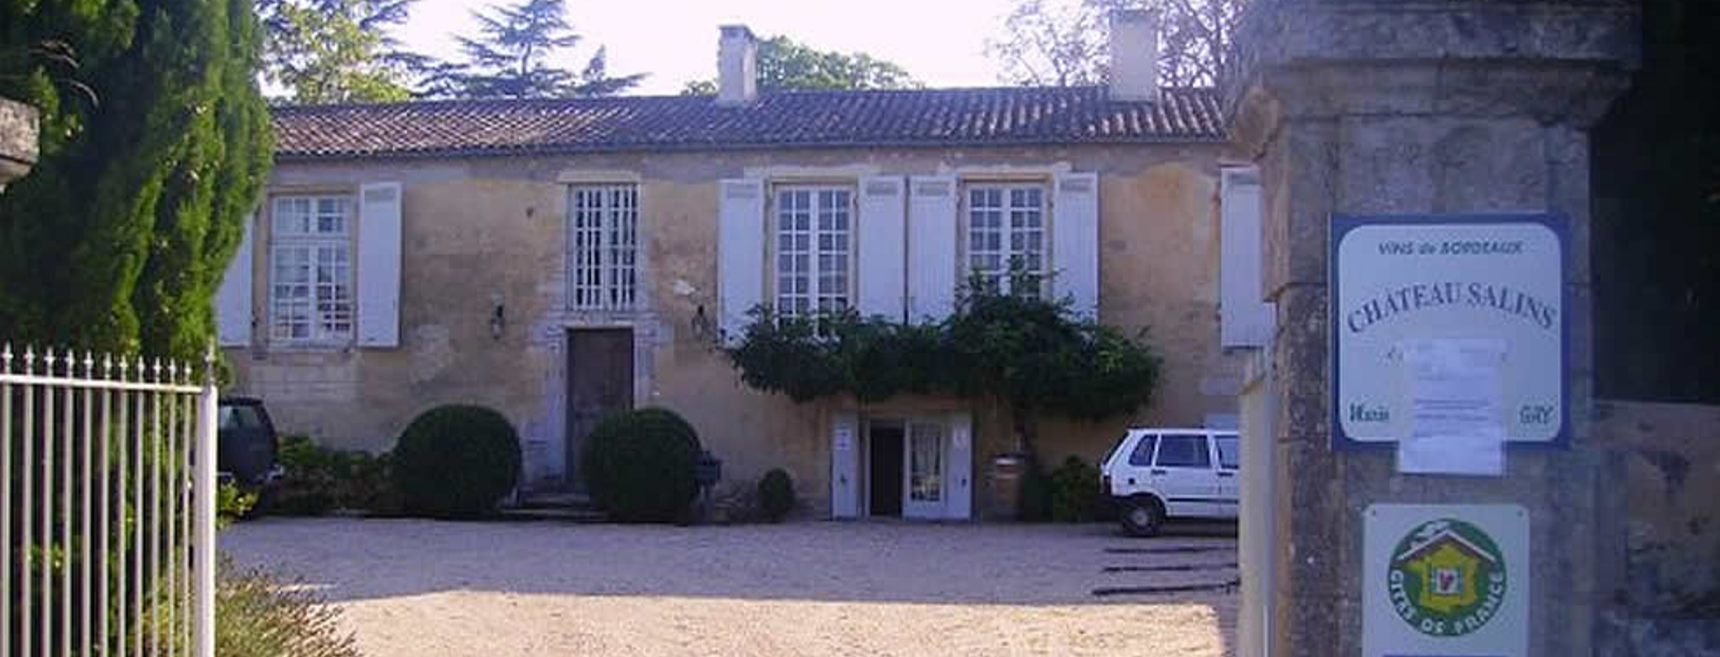 Château Salin